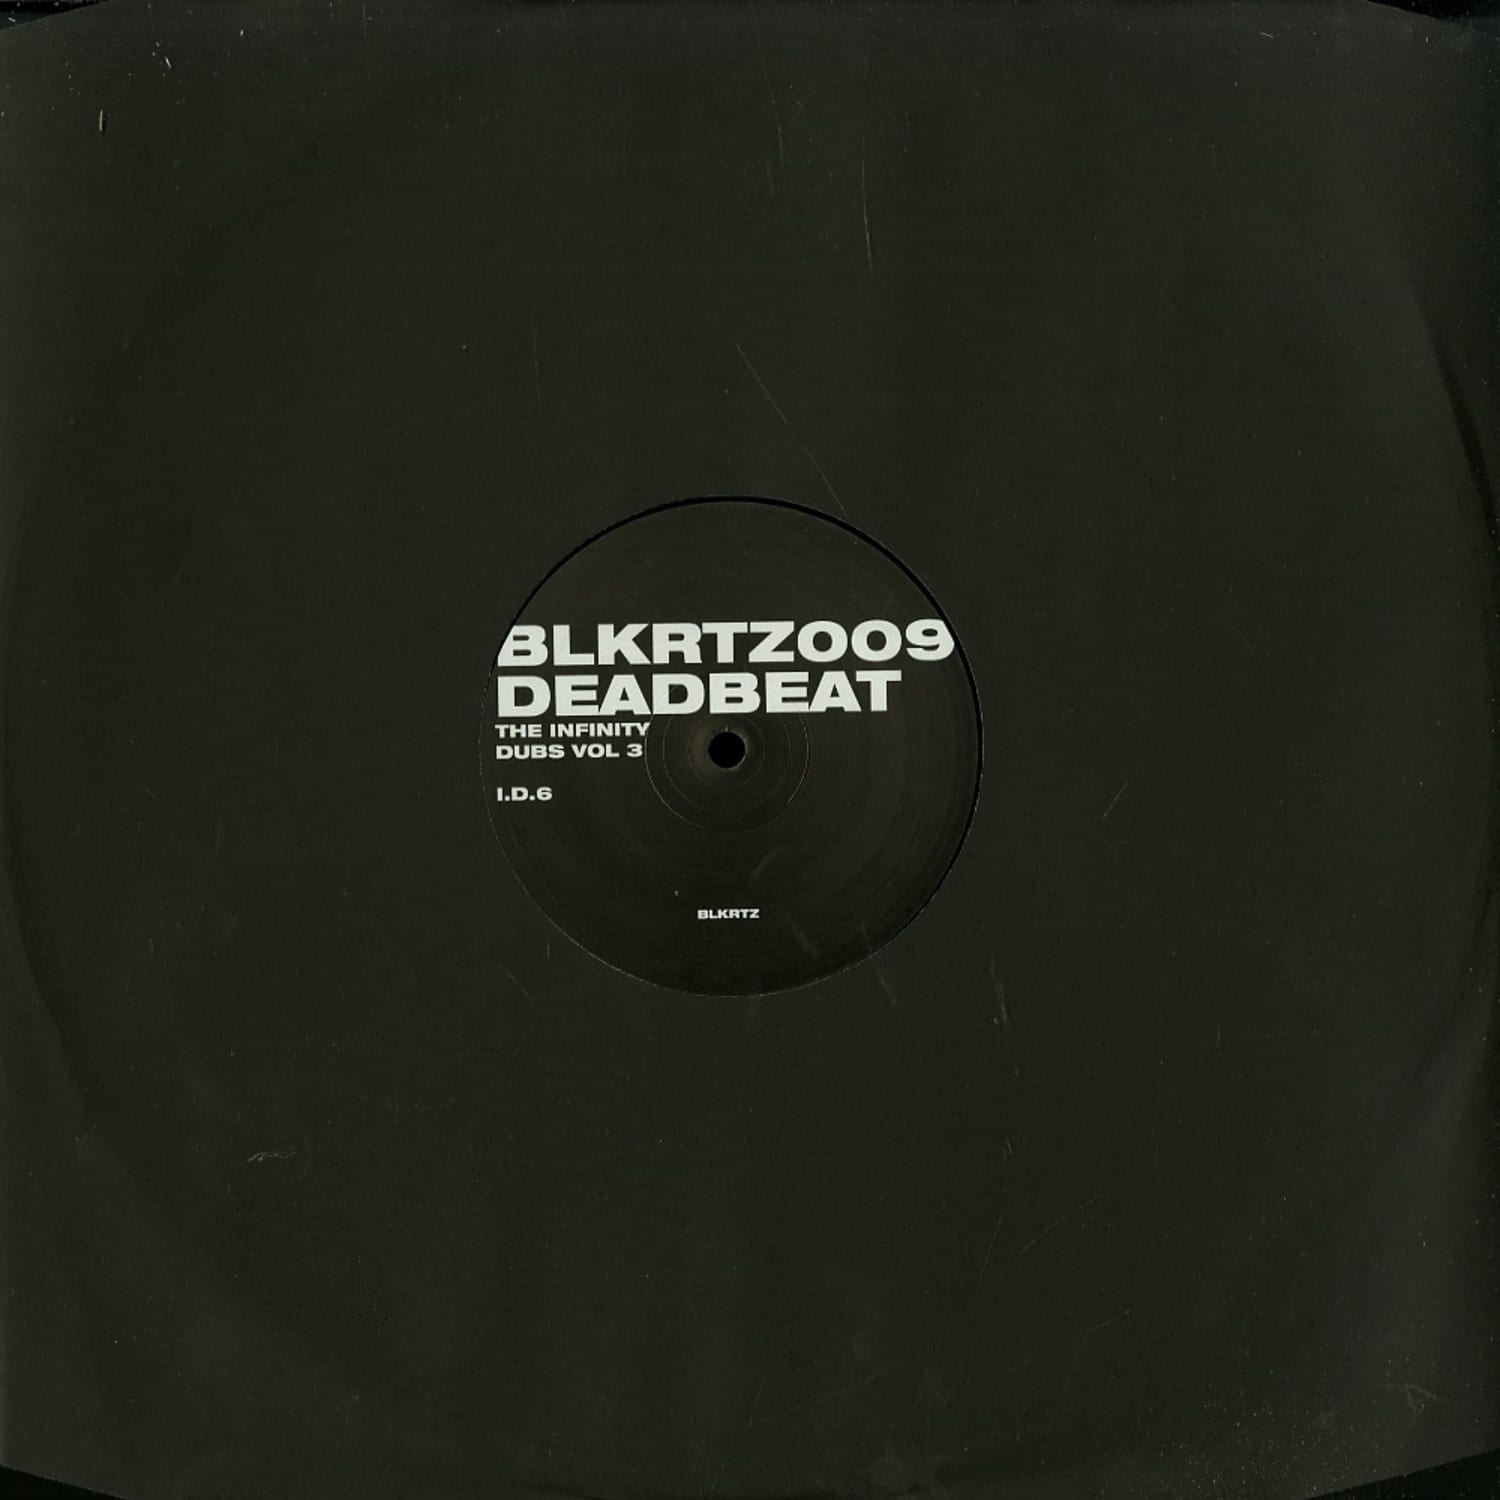 Deadbeat - INFINITY DUBS VOL. 3